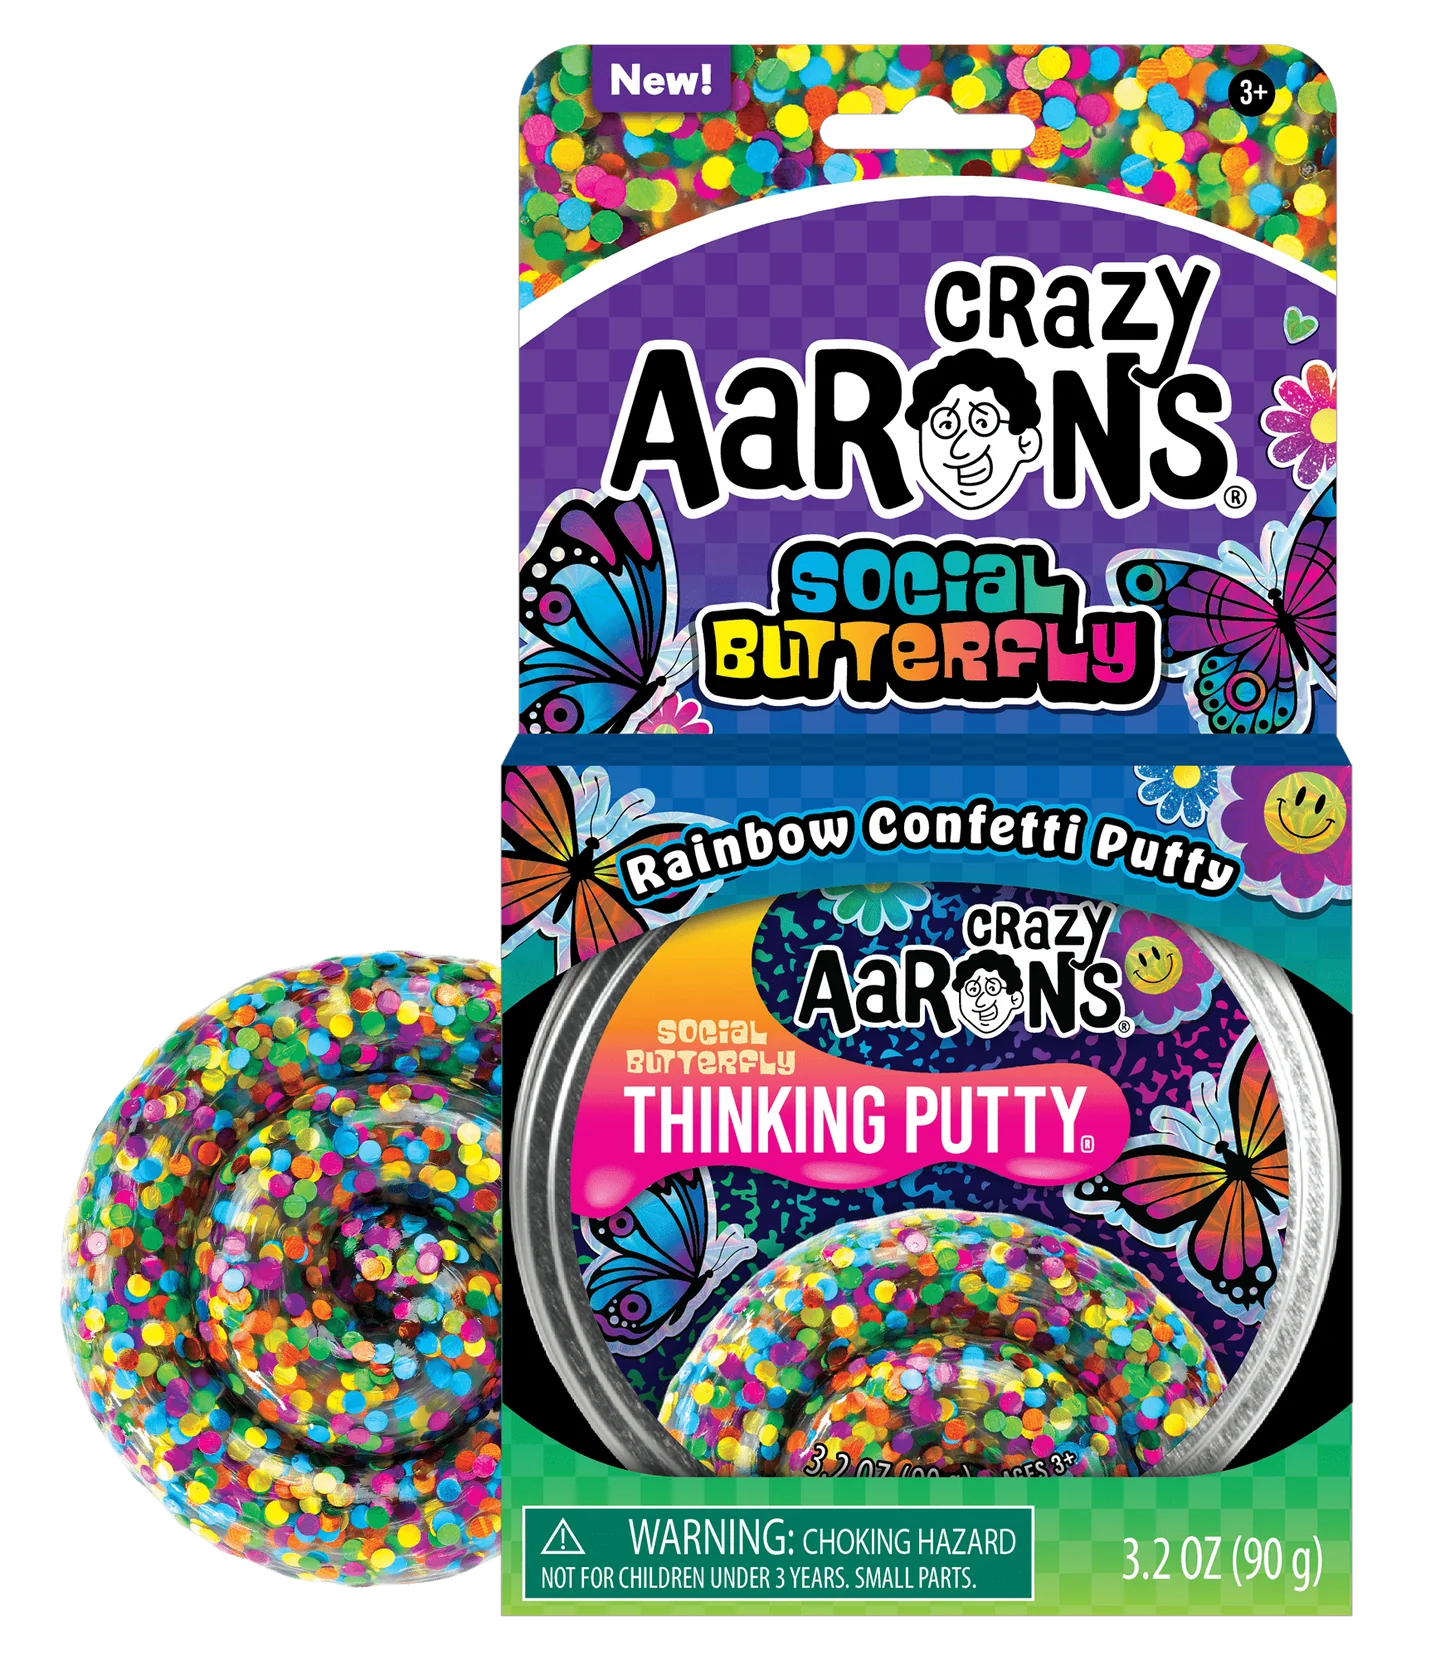 Crazy Aaron's Thinking Putty 4” Trendsetters Tin - Rainbow